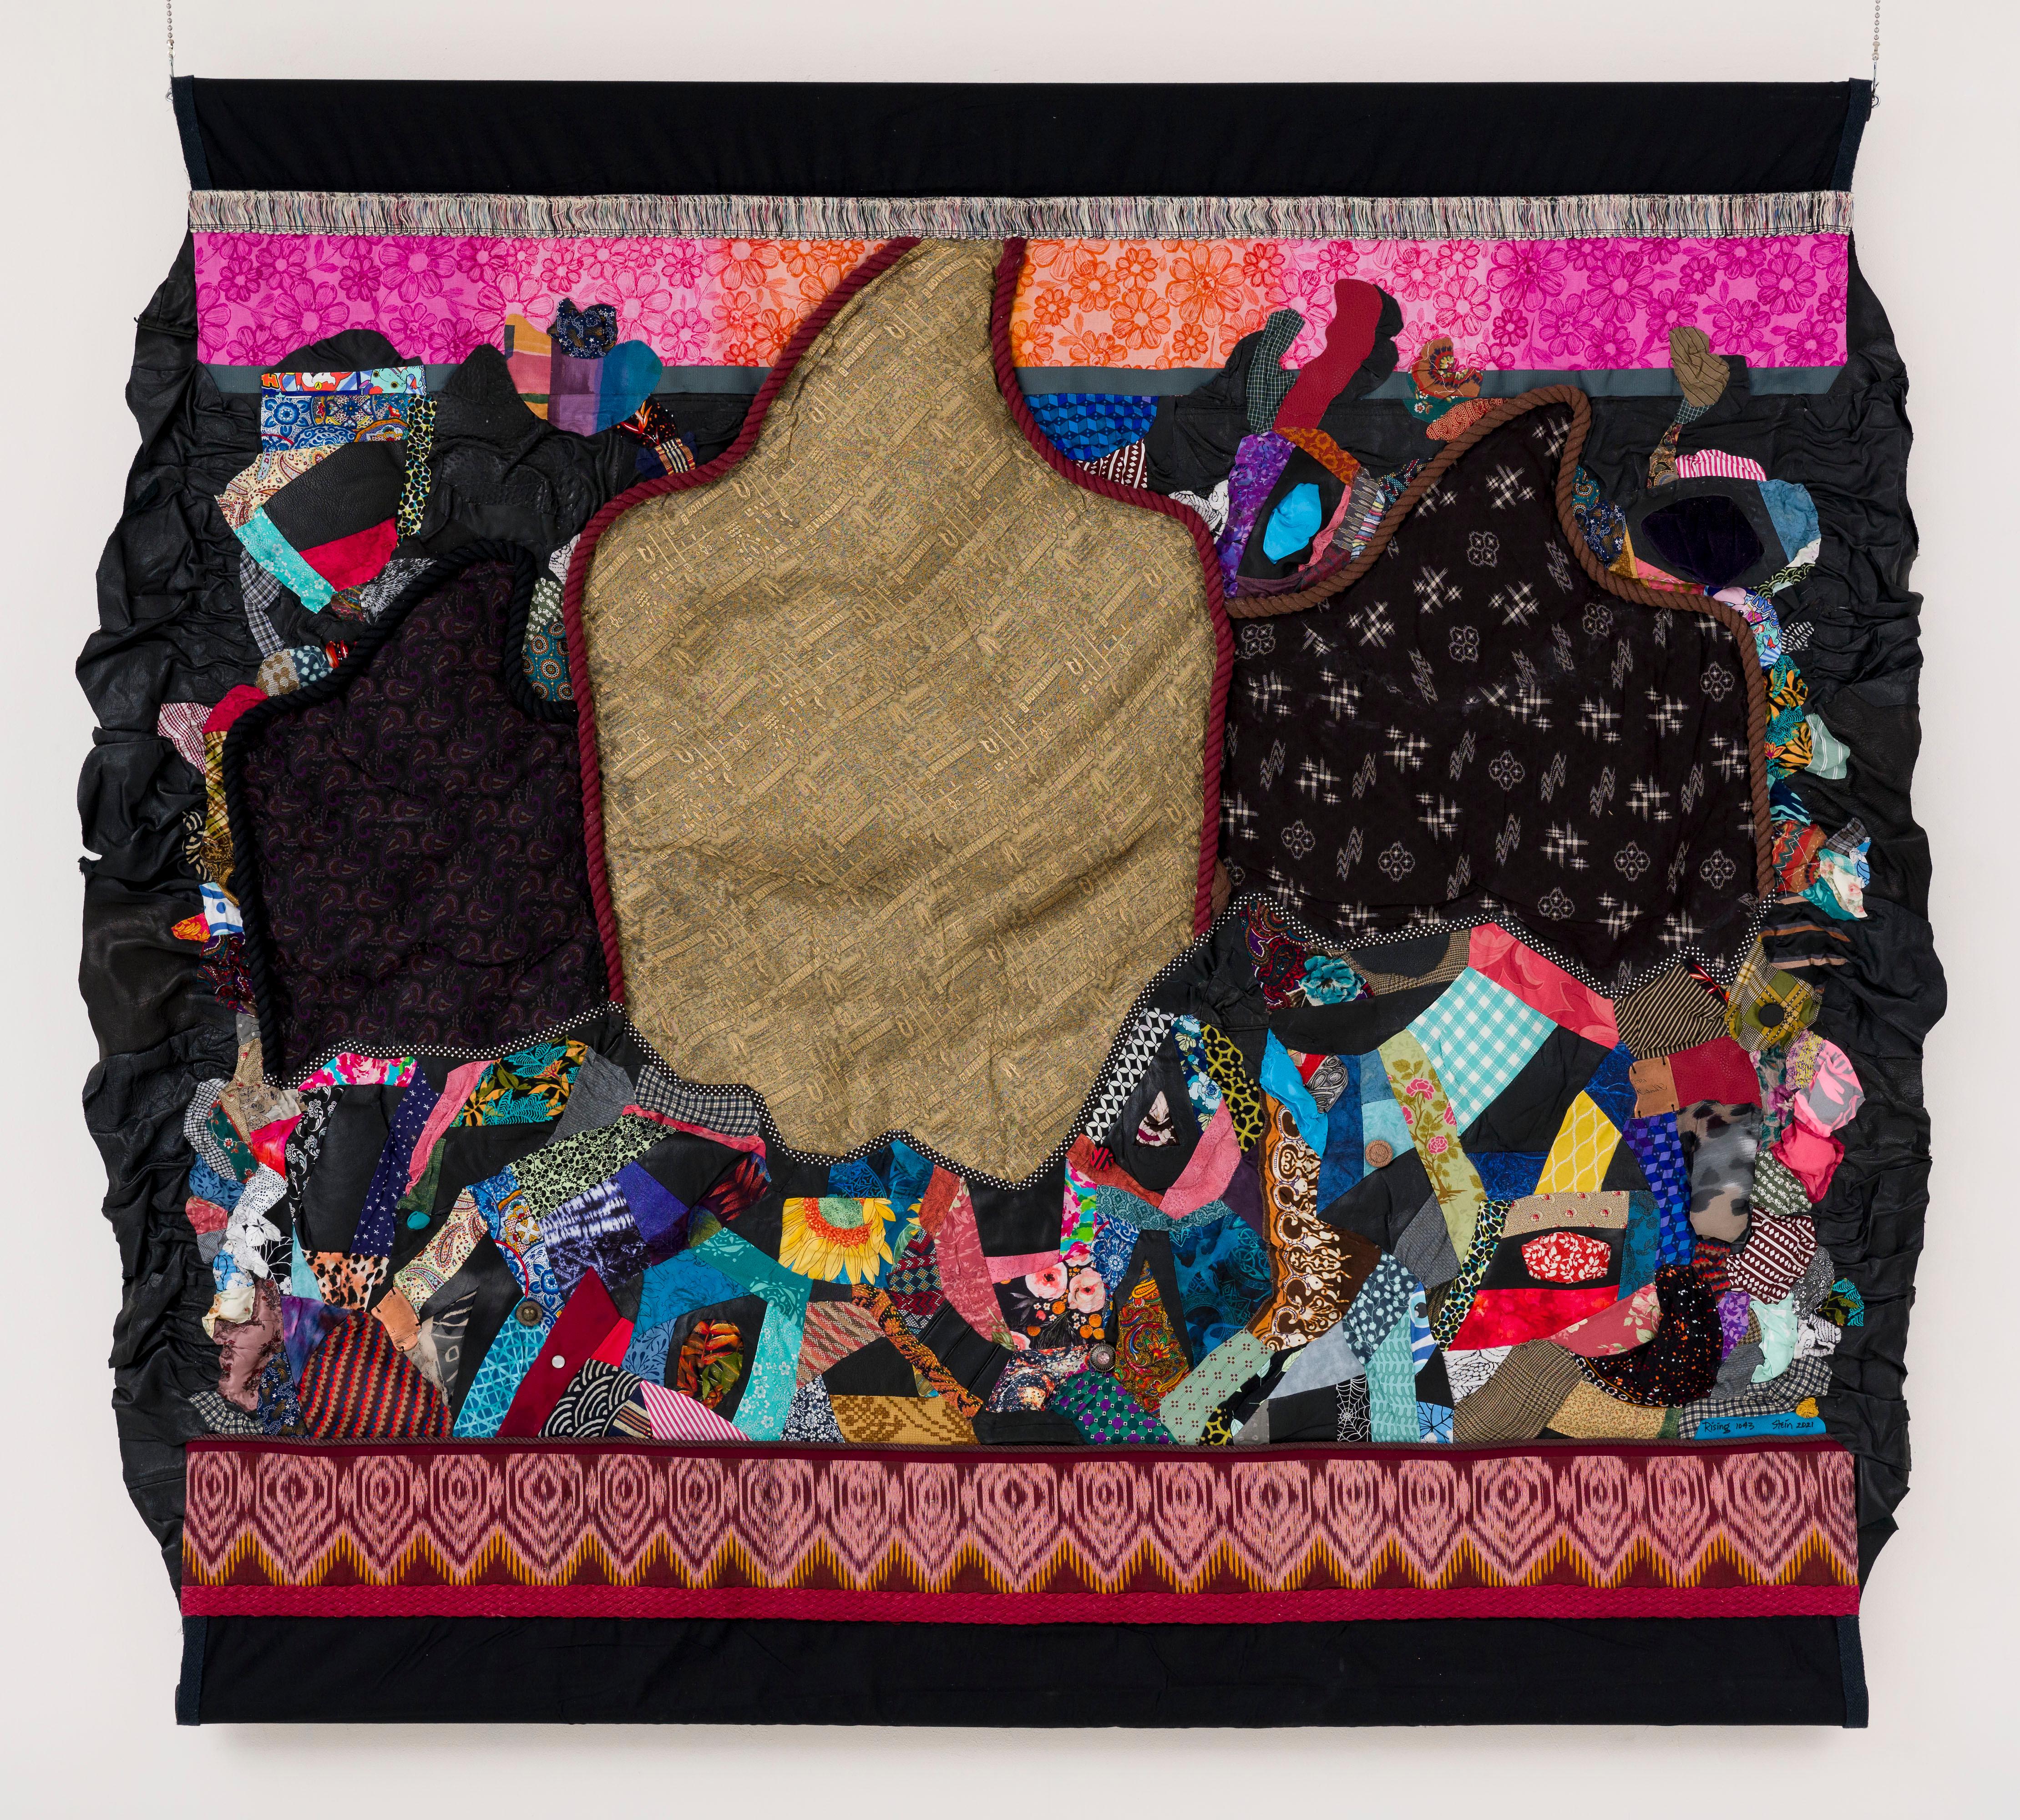 Rising 1043 - Contemporary Art, Mixed Media Sculptural Tapestry - Mixed Media Art by Linda Stein